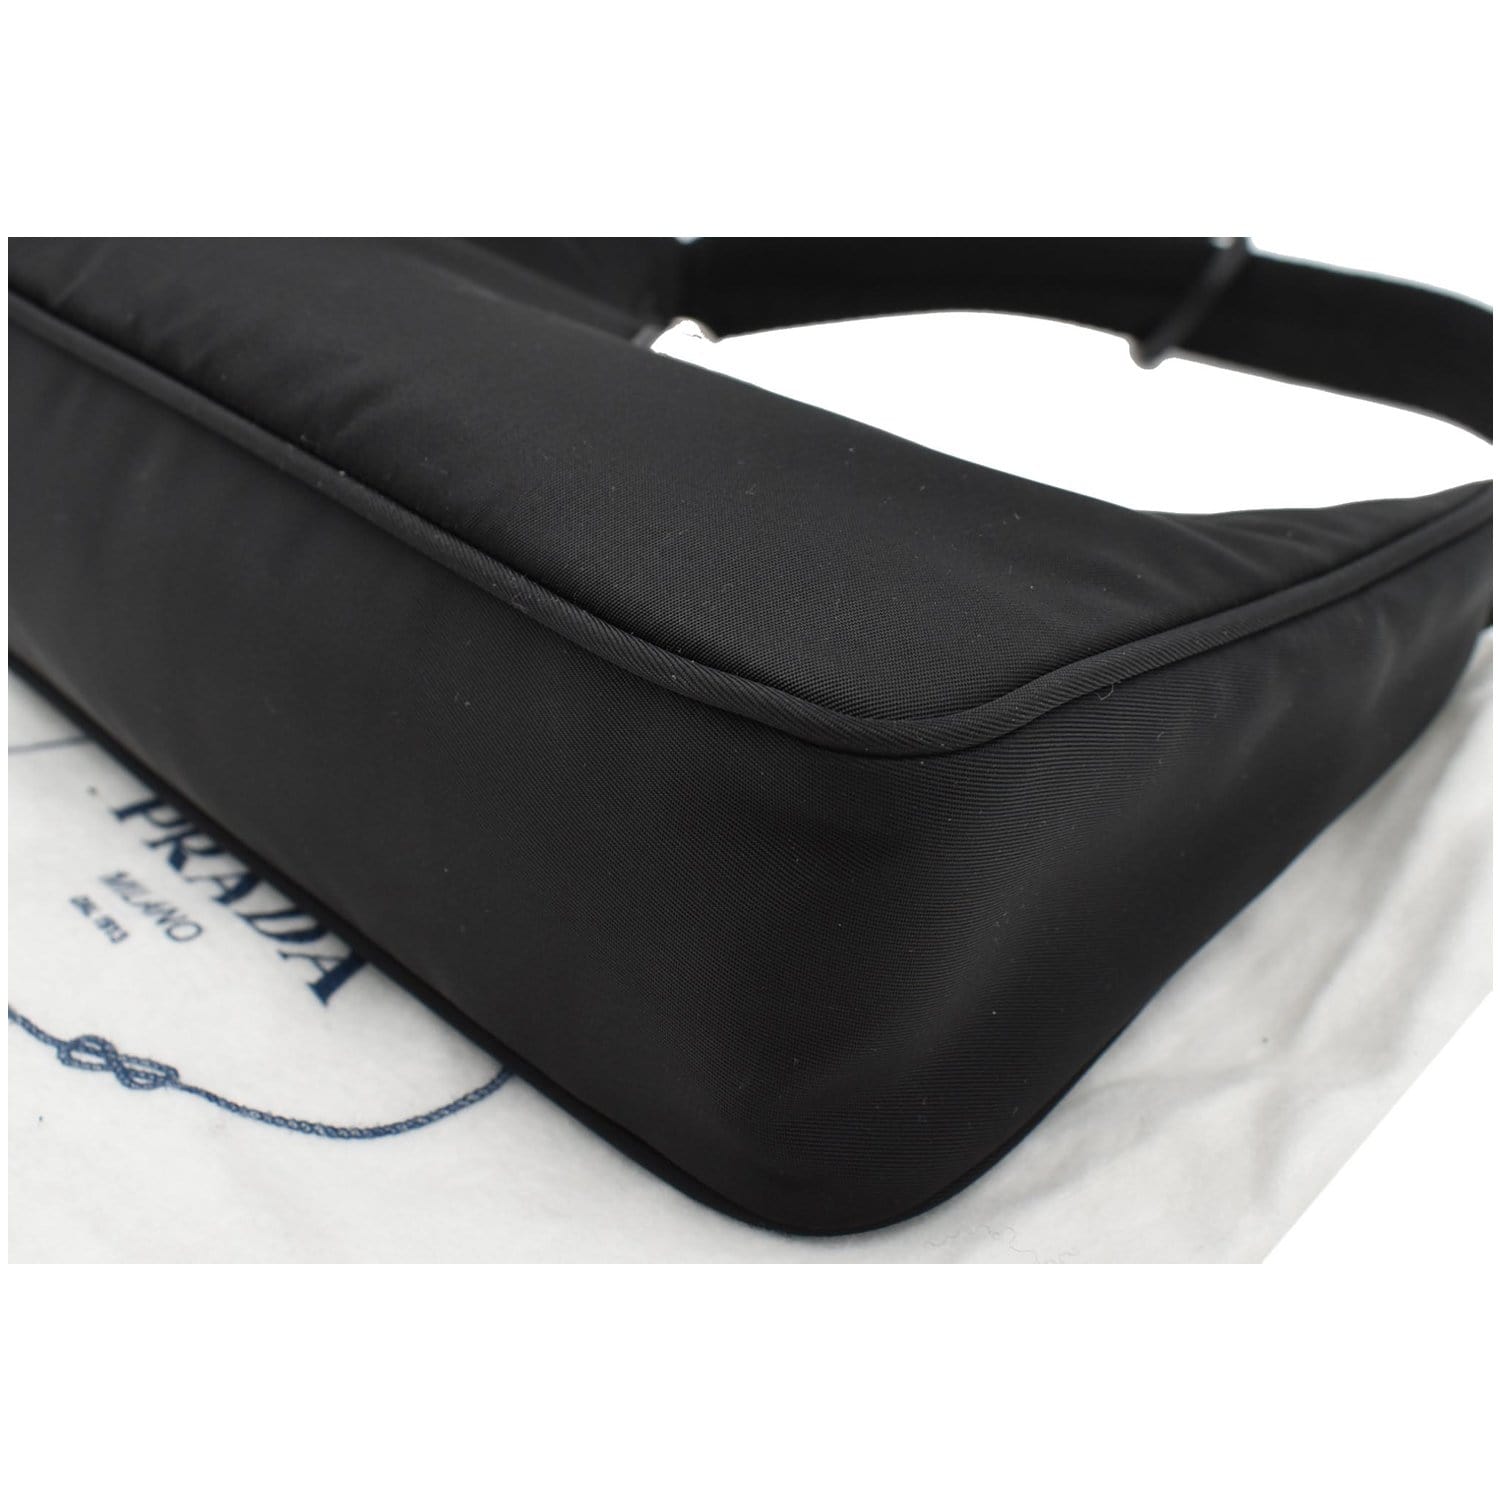 PRADA Re-Edition 2000 Mini Nylon Shoulder Bag Black